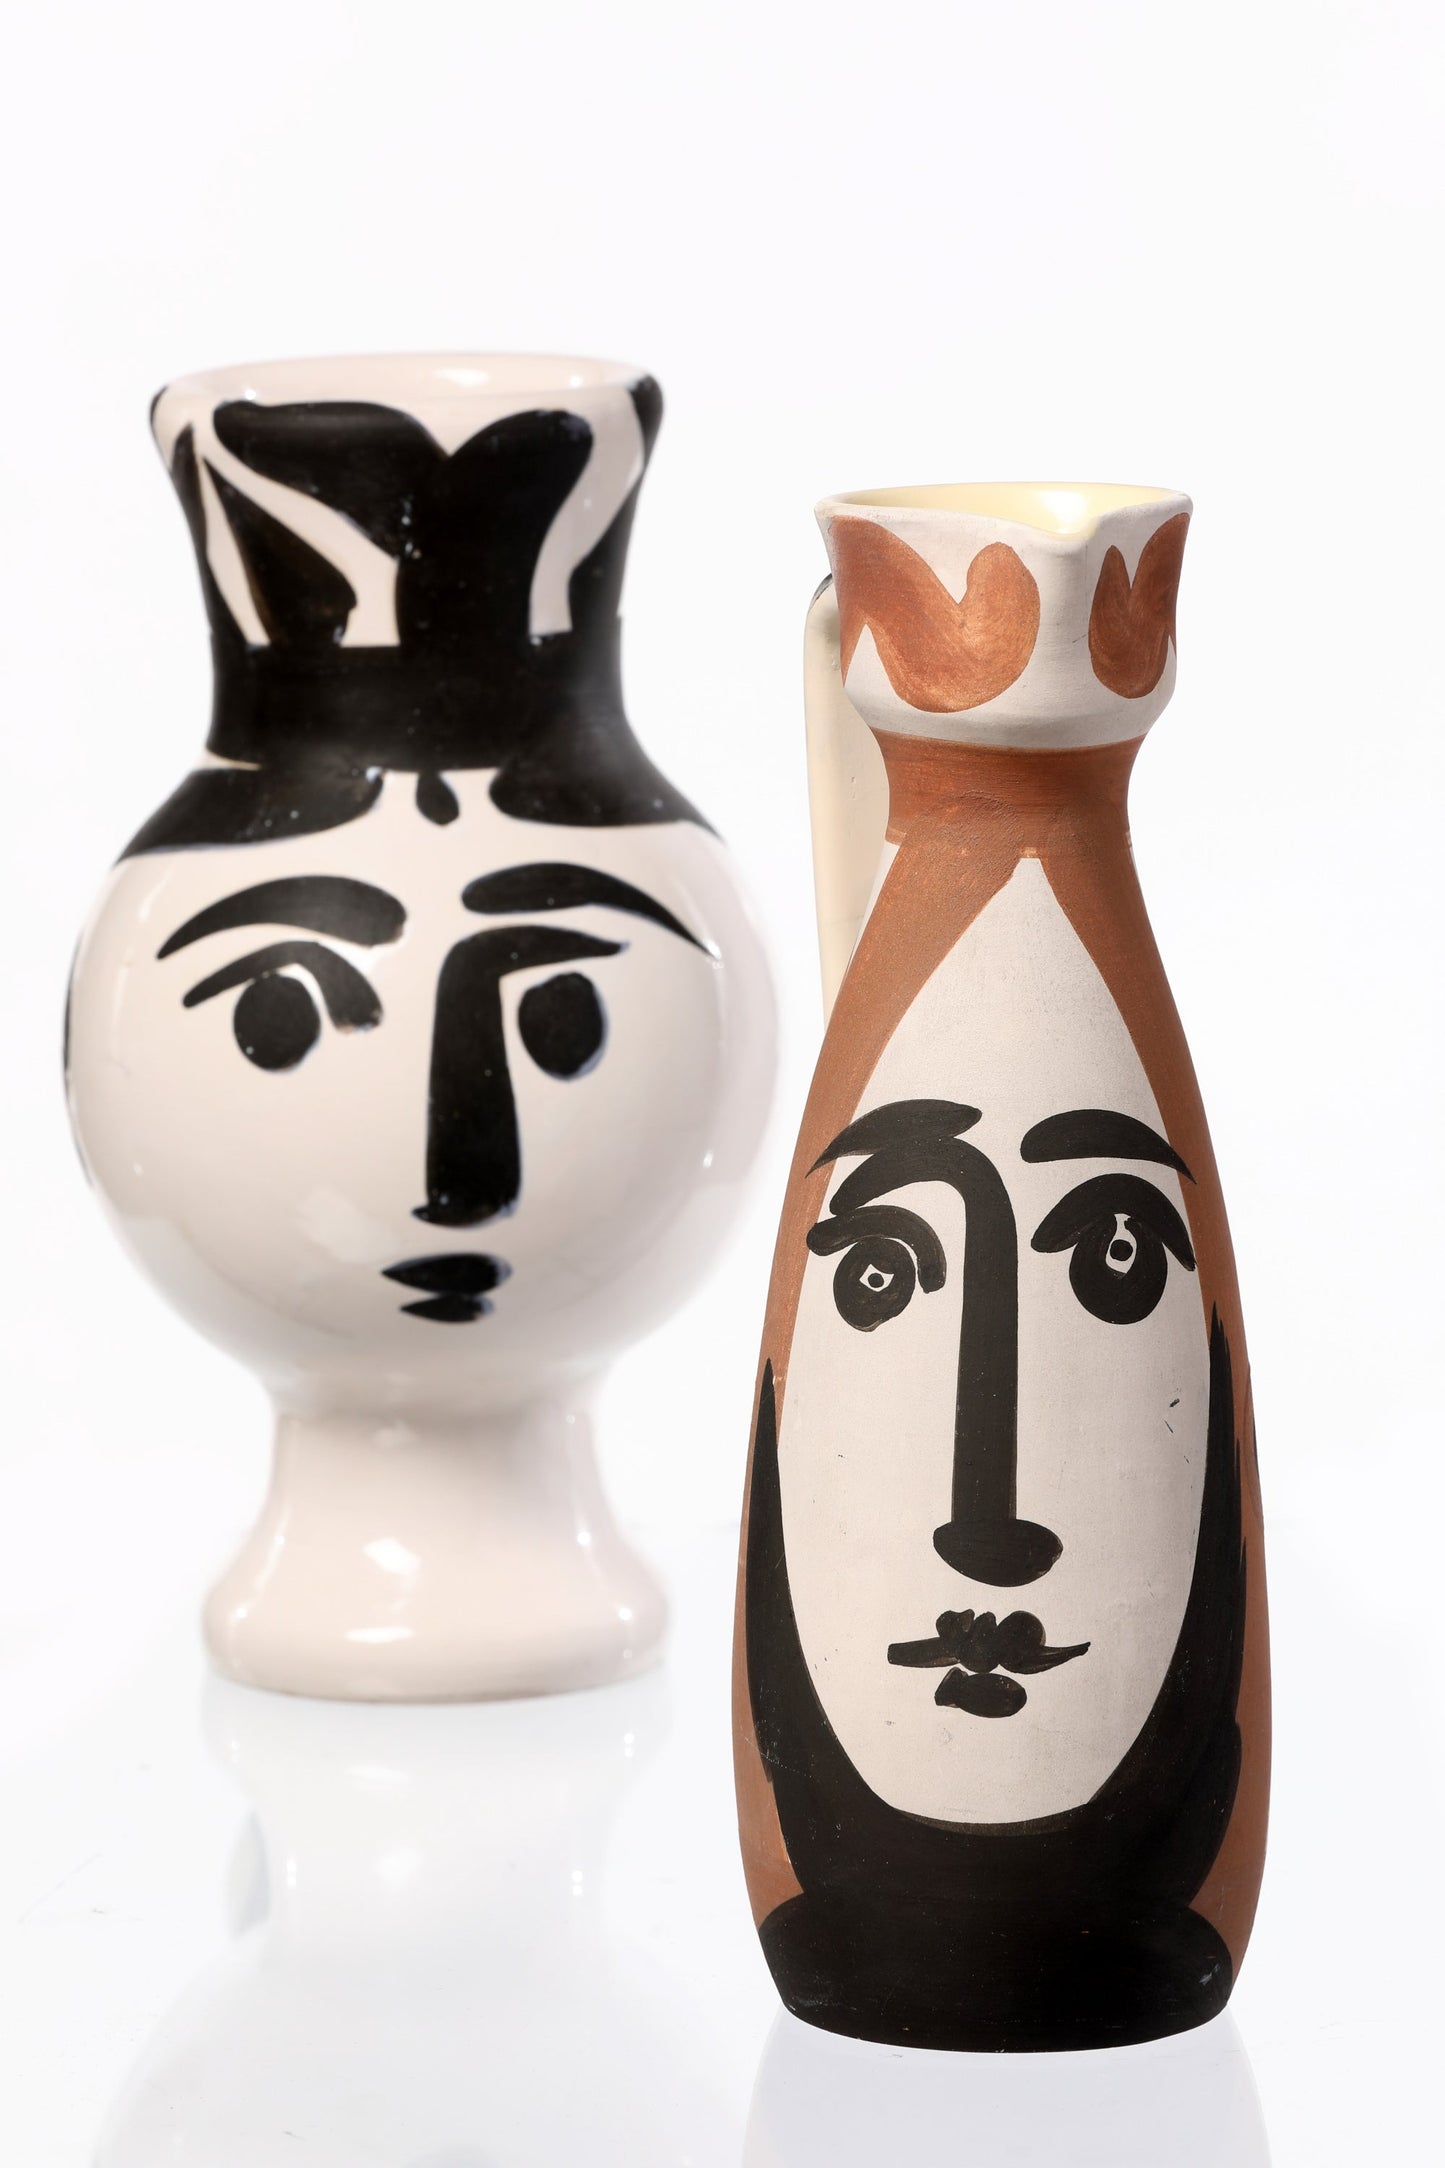 Pablo Picasso Vase for Madoura Pitcher Visage 1955